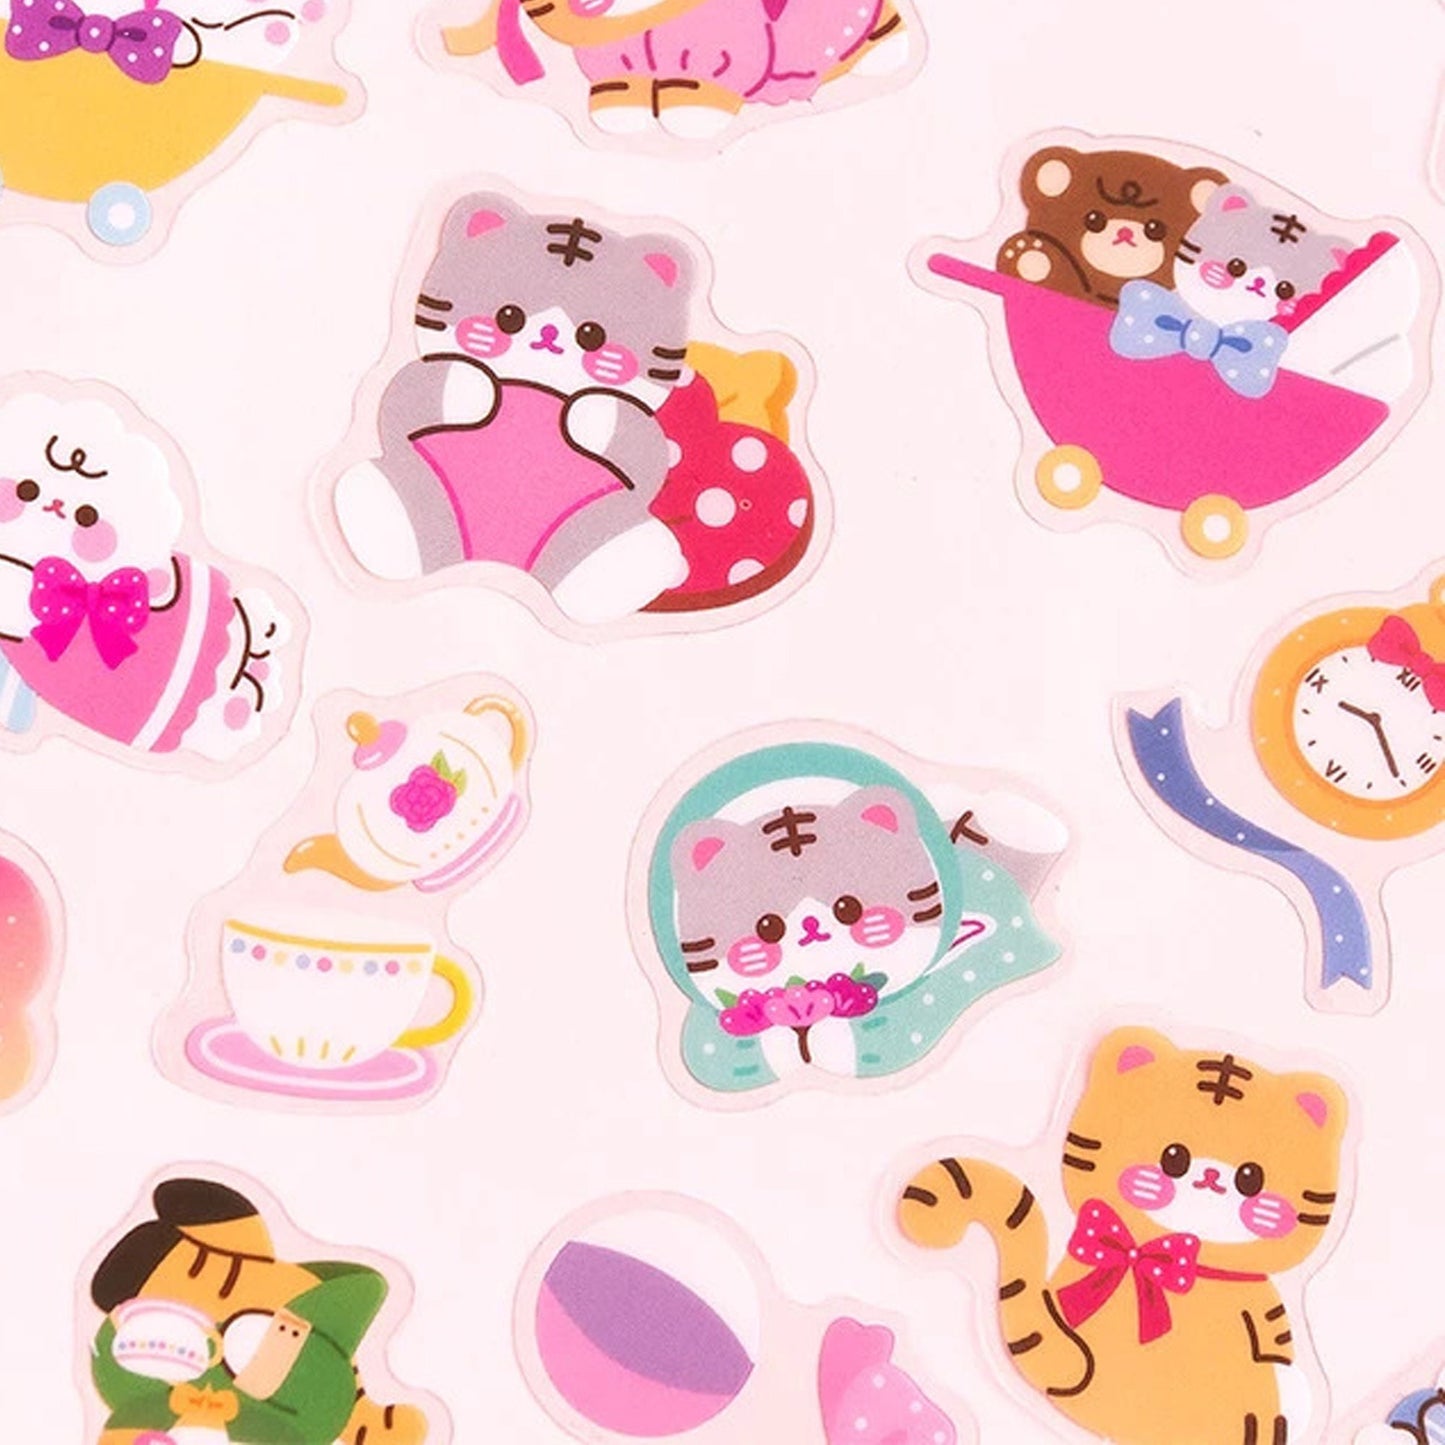 Cute Kawaii Stickers, Clear Stickers, Cat & Bears, Cute Wind Sugar Heart Baby Series, Journal Flakes, Planner Stickers, Sticker Pack B3C